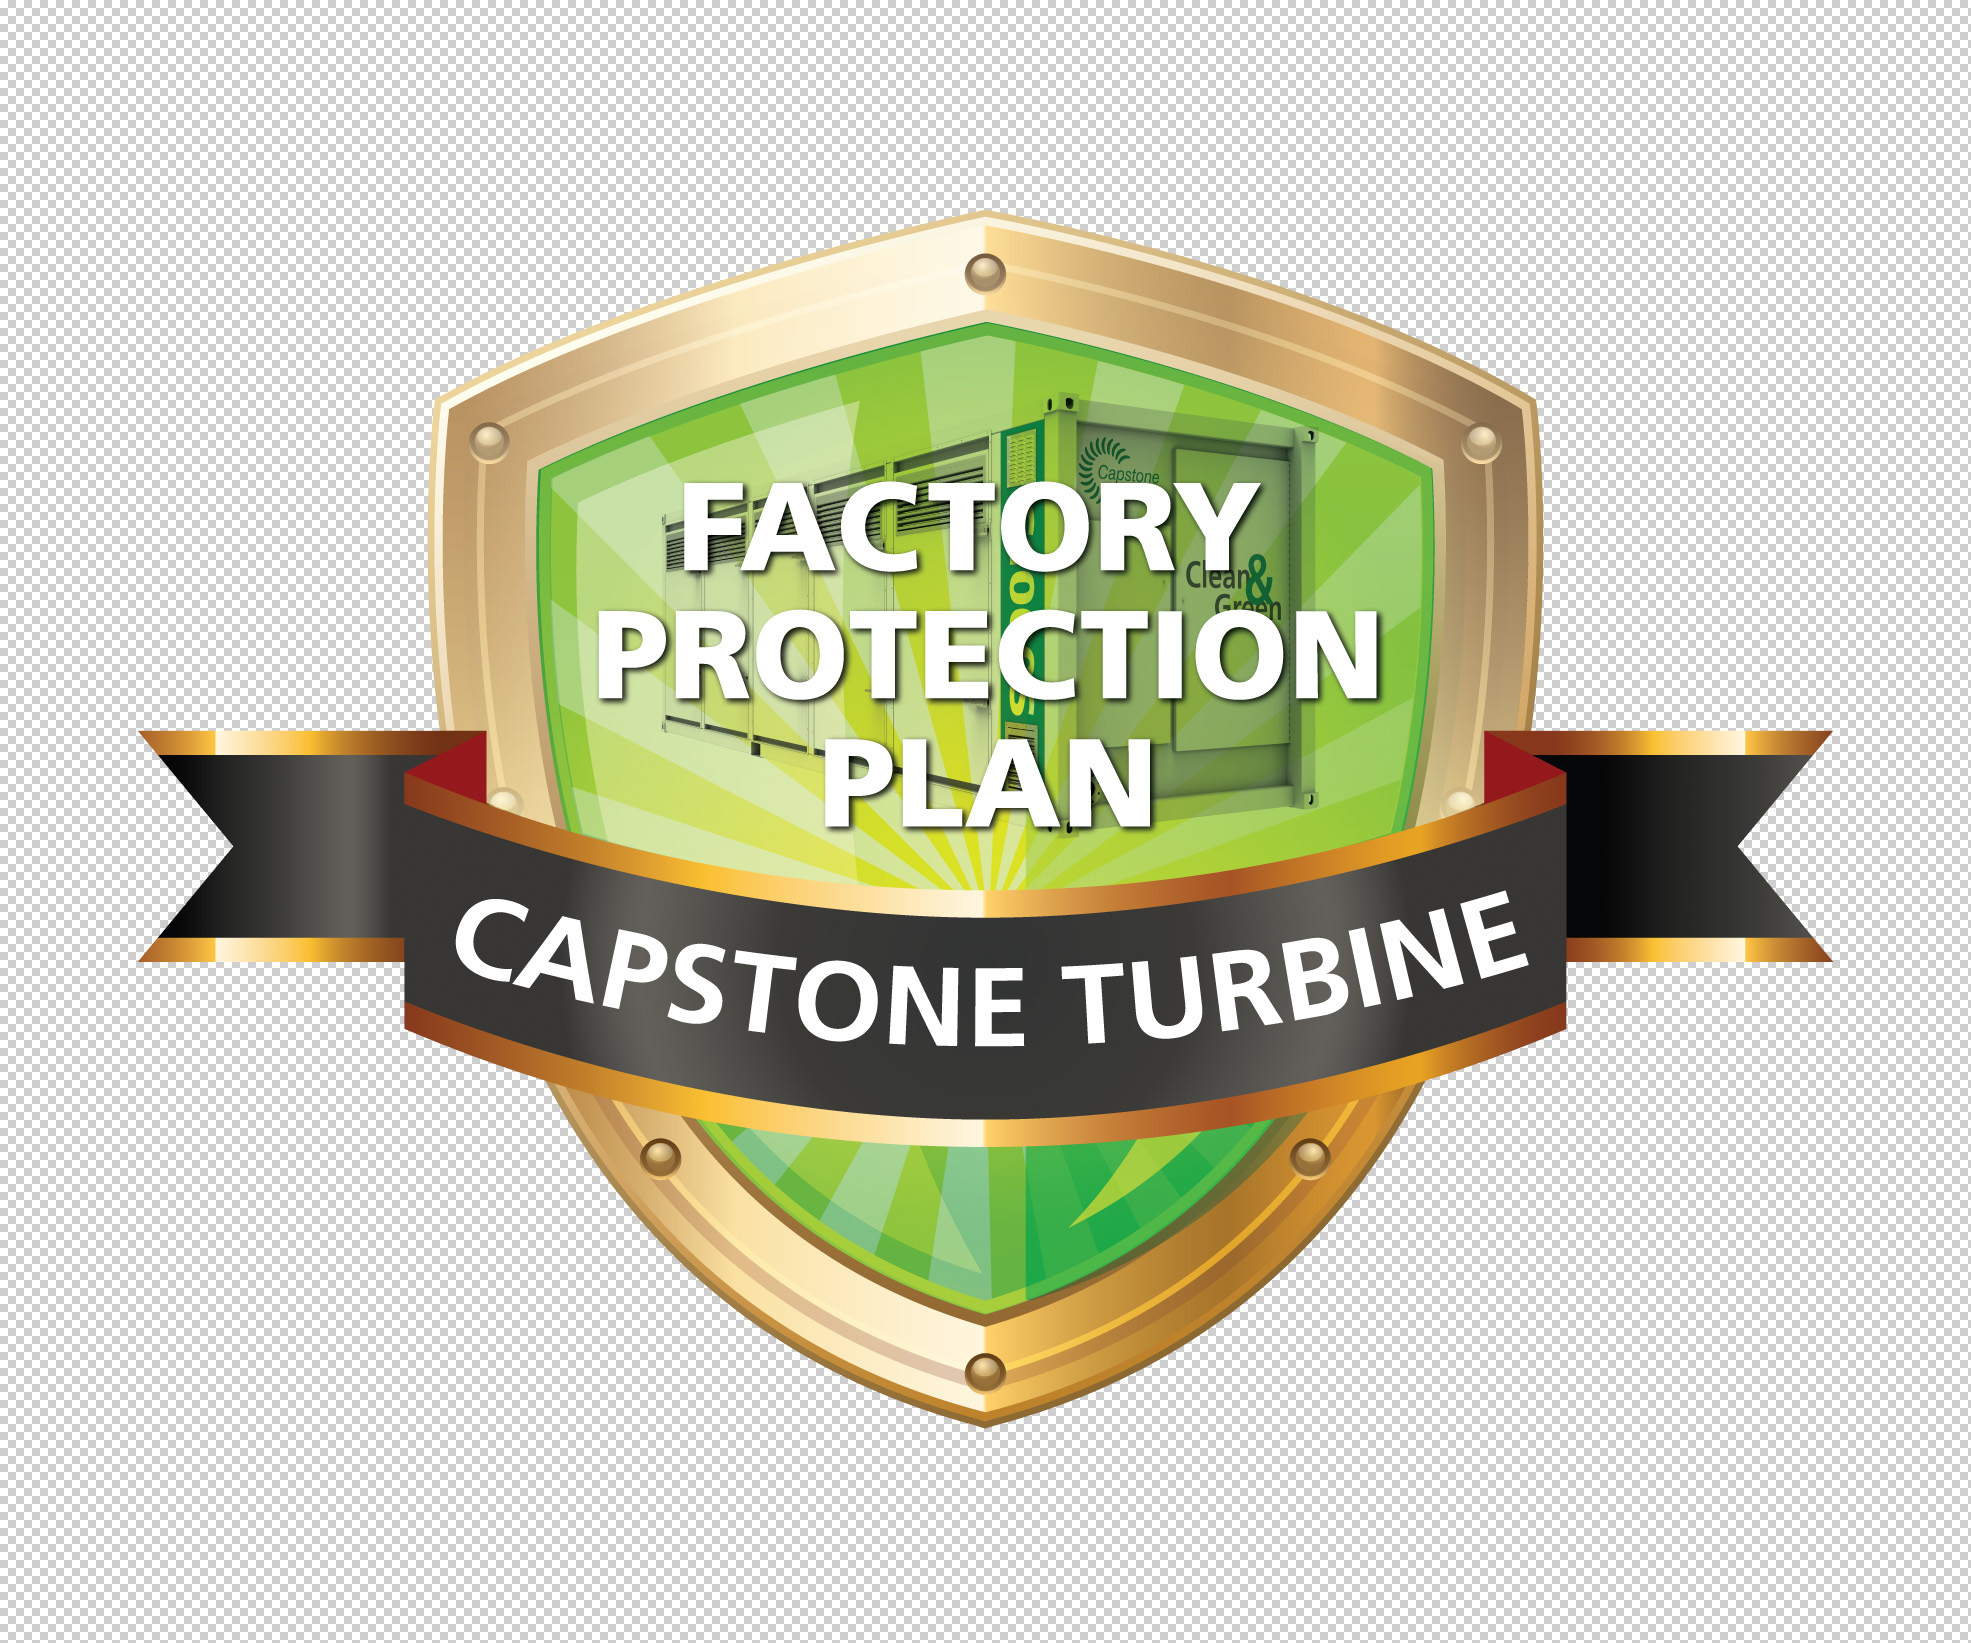 Capstone Turbine Corporation, Wednesday, December 11, 2019, Press release picture